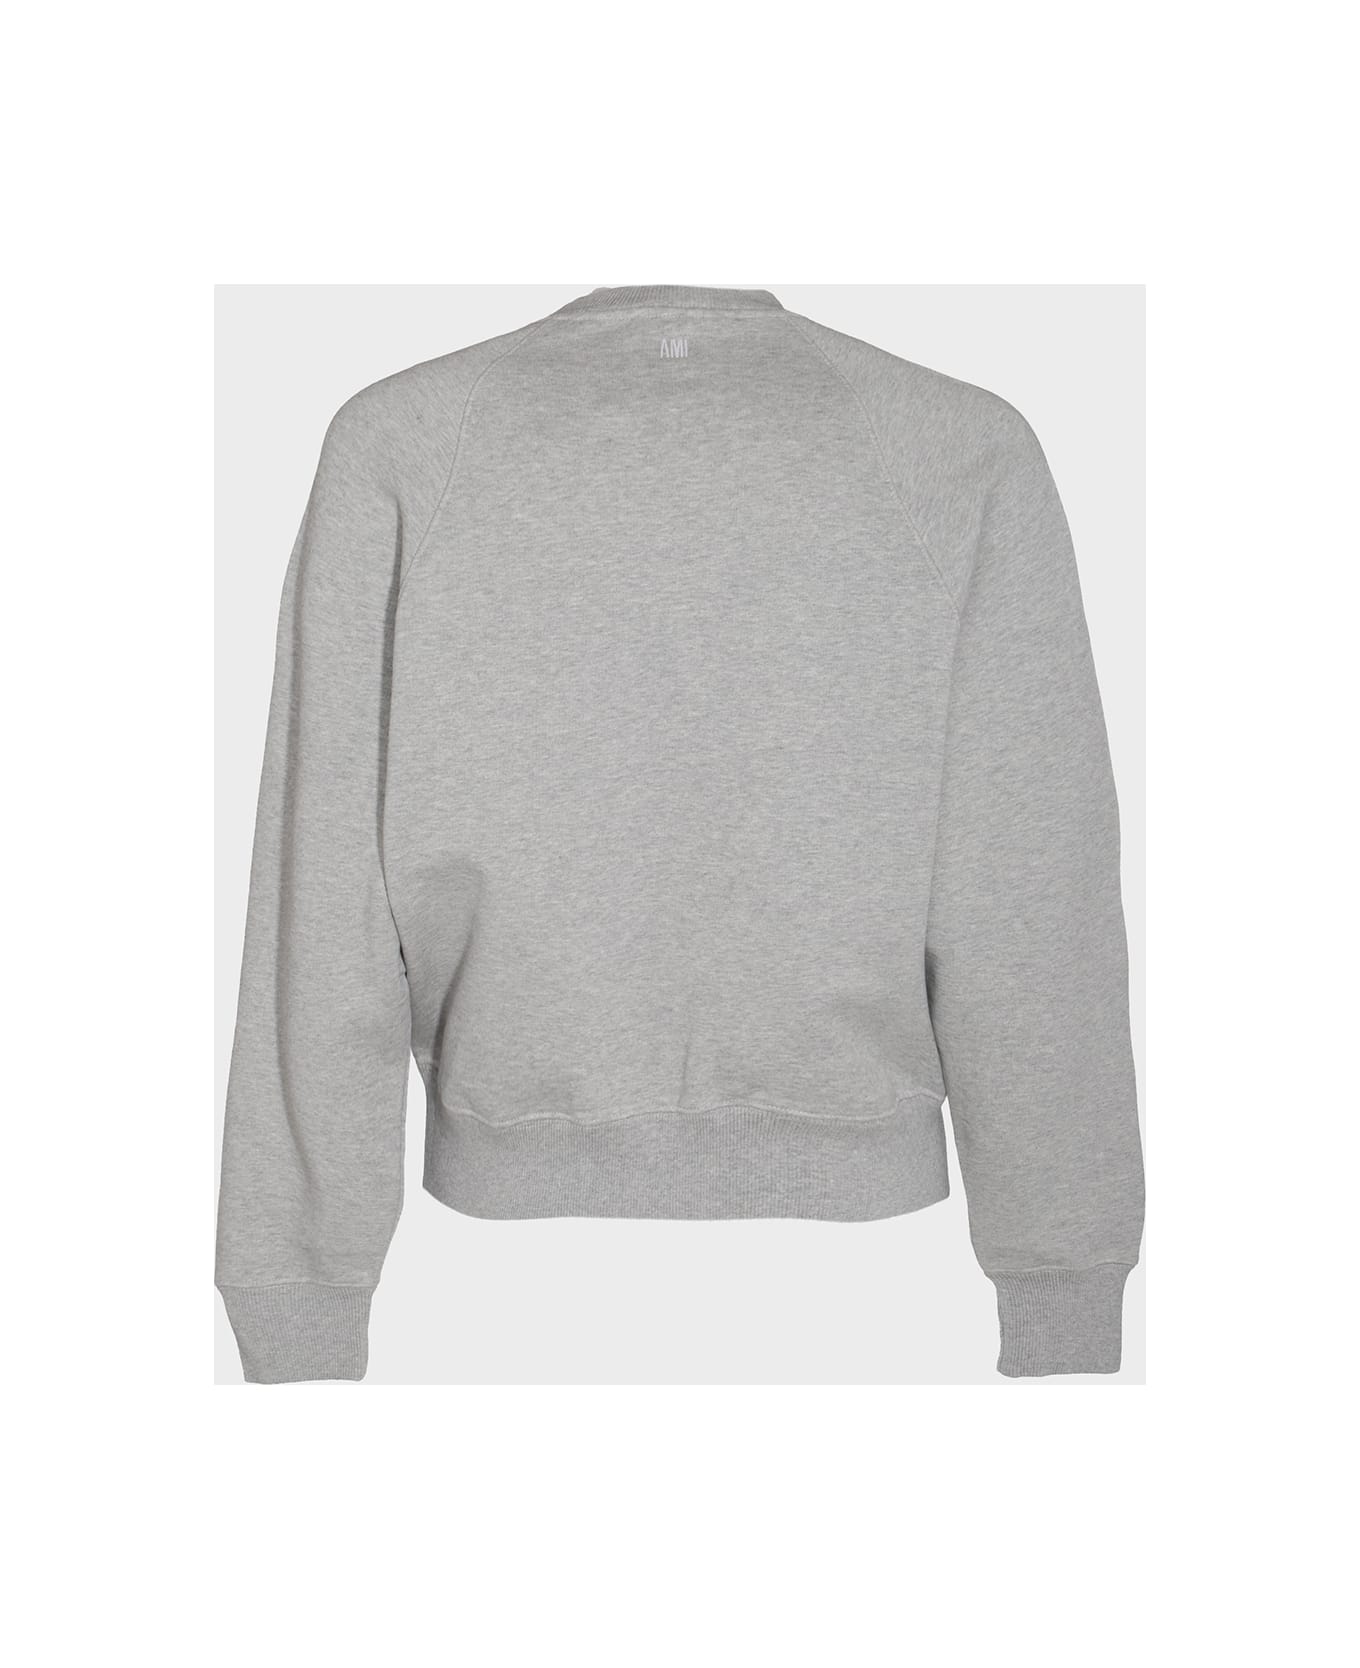 Ami Alexandre Mattiussi Grey Cotton Sweatshirt - GREY